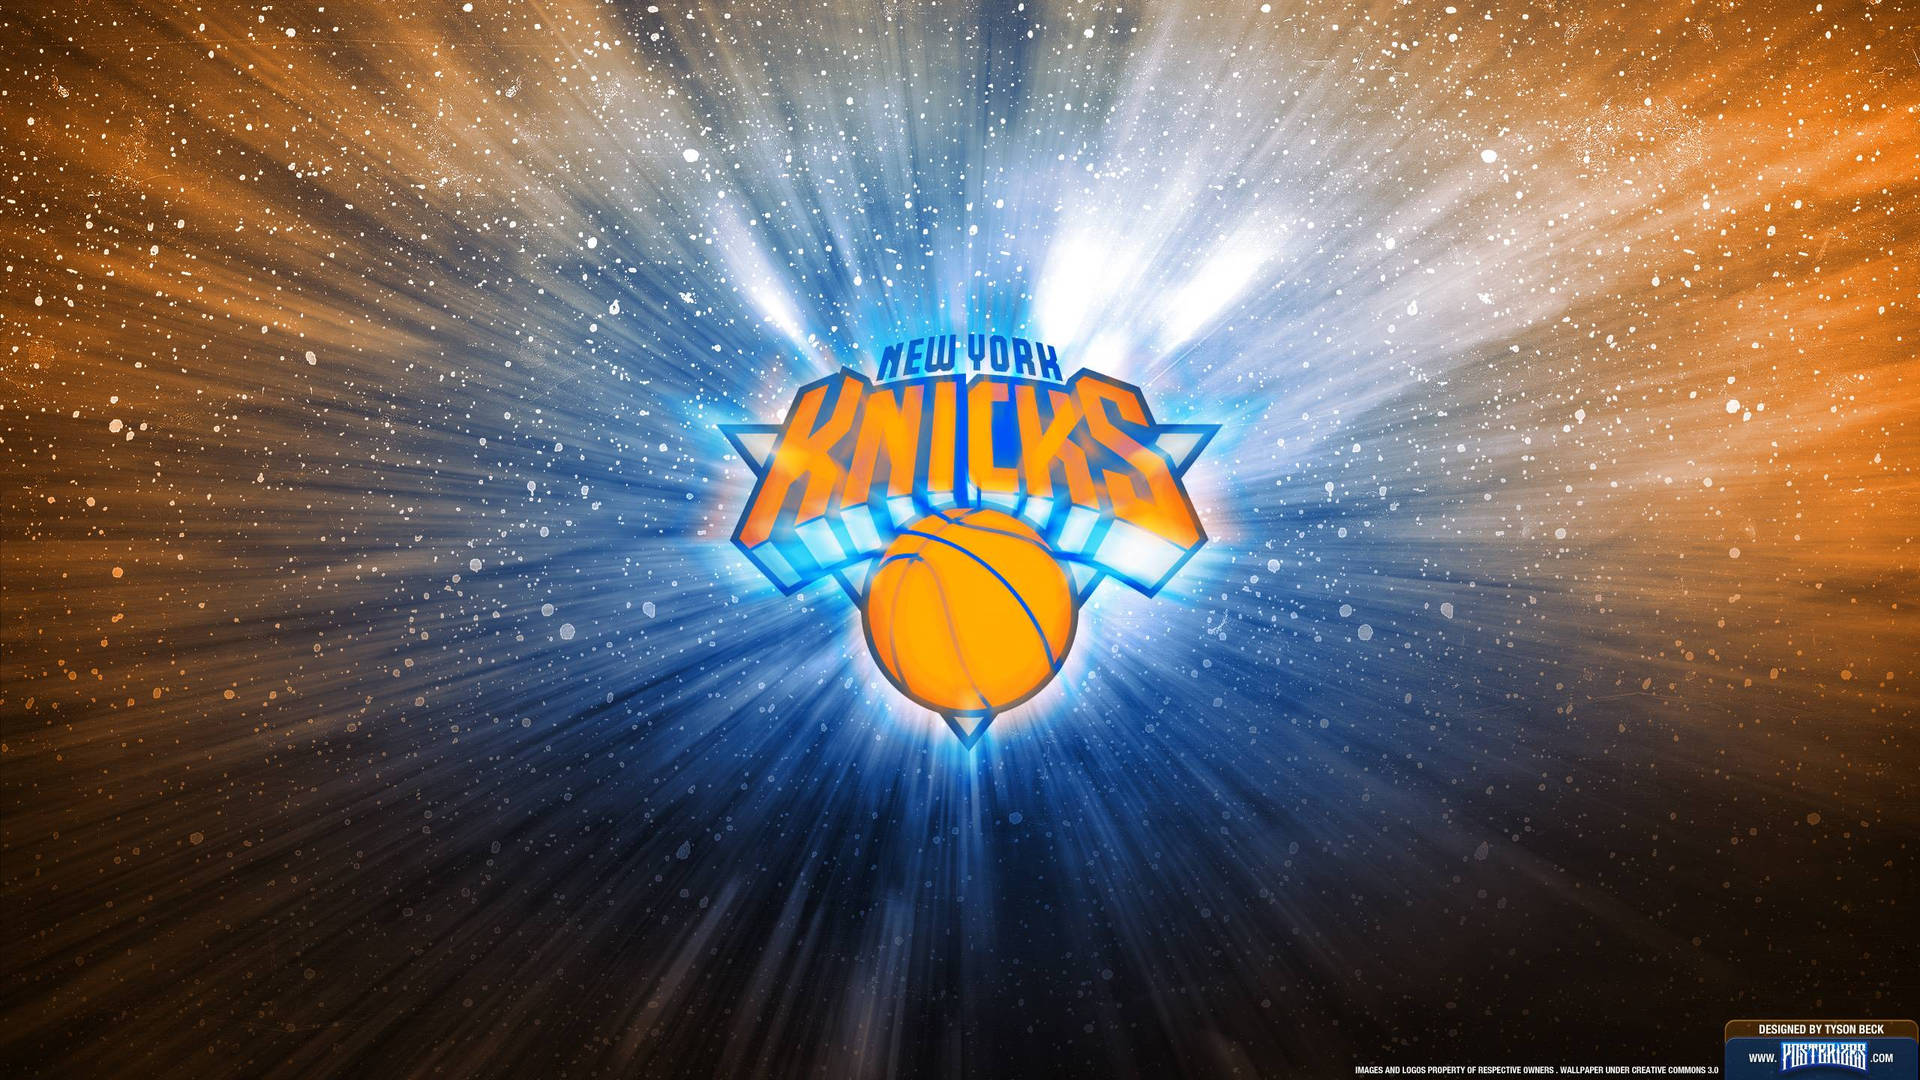 New York Knicks Basketball Team Wallpaper